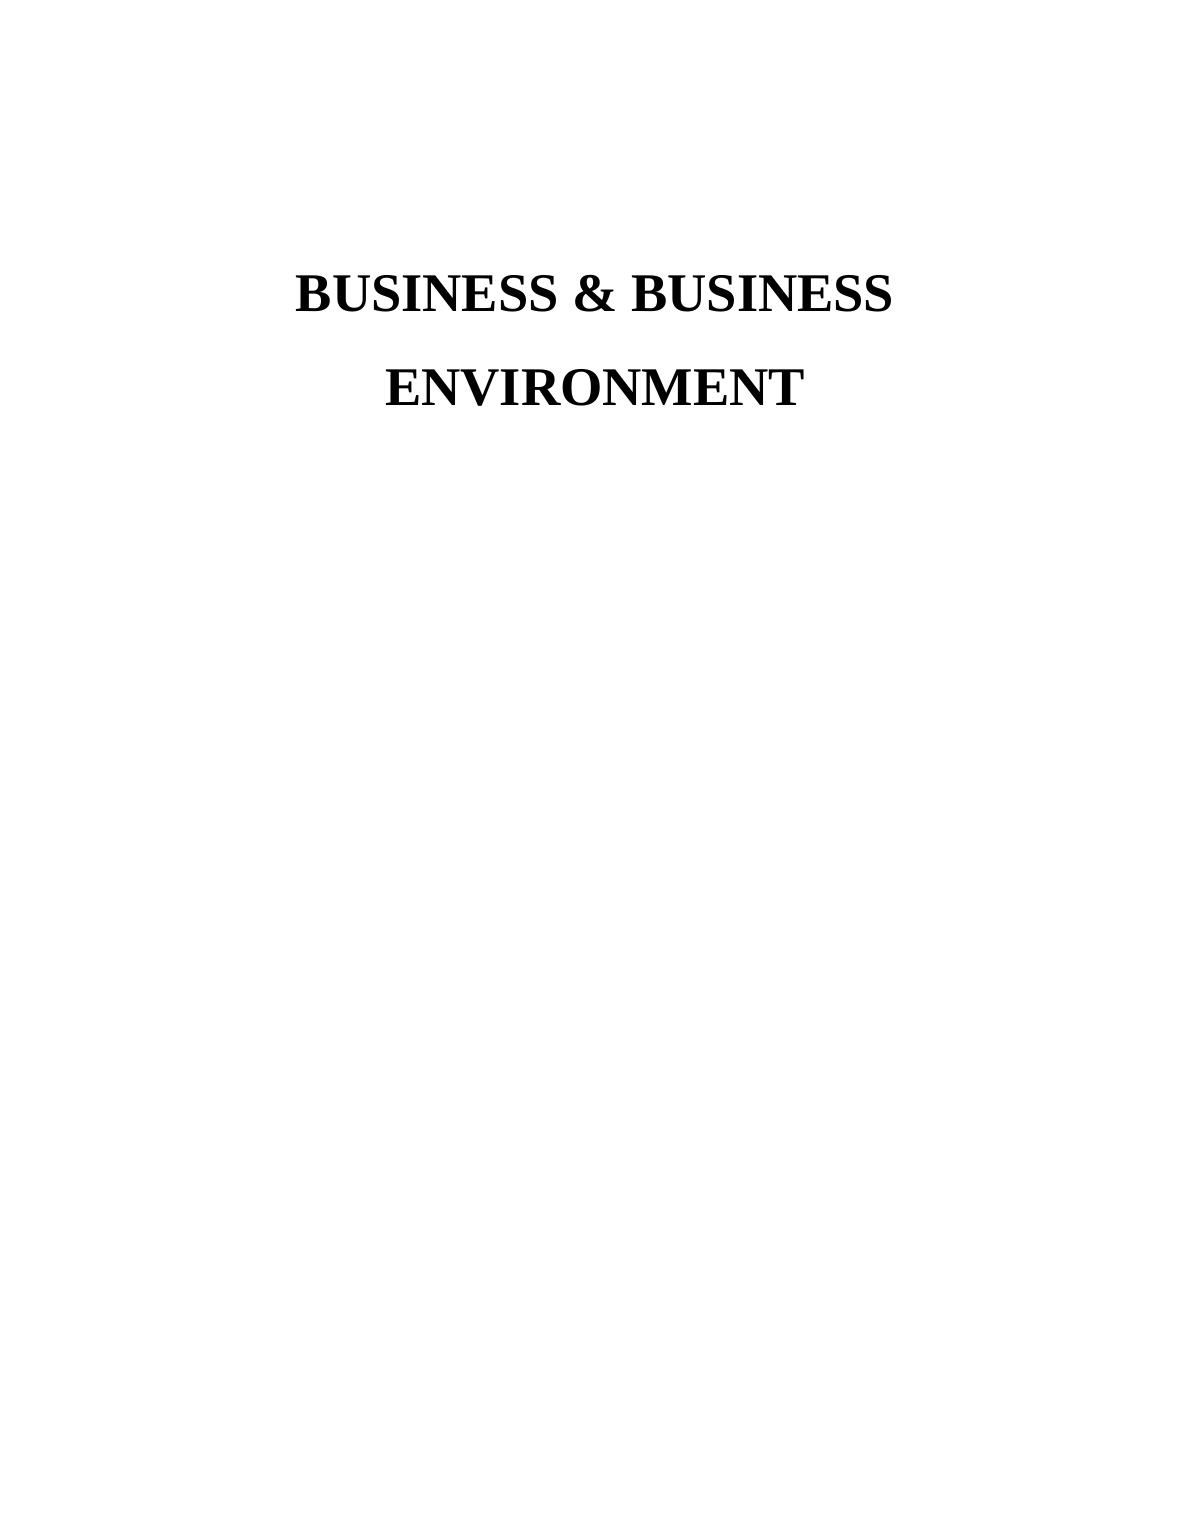 Business Environment | Assignment_1